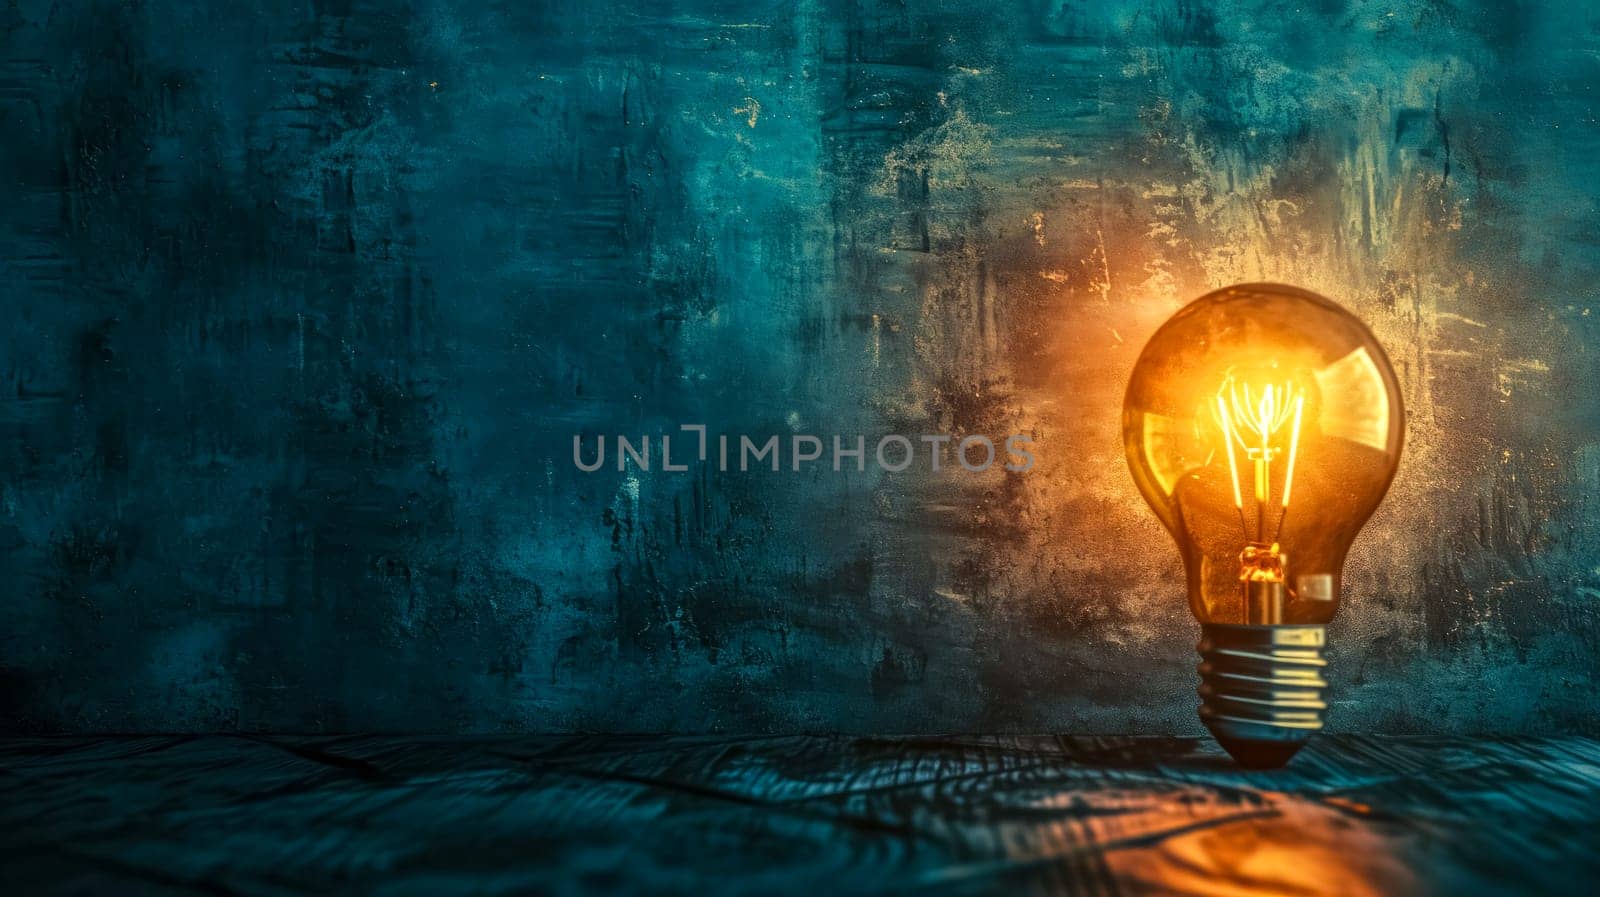 Illuminated light bulb on a rustic background symbolizing ideas and innovation. by Edophoto